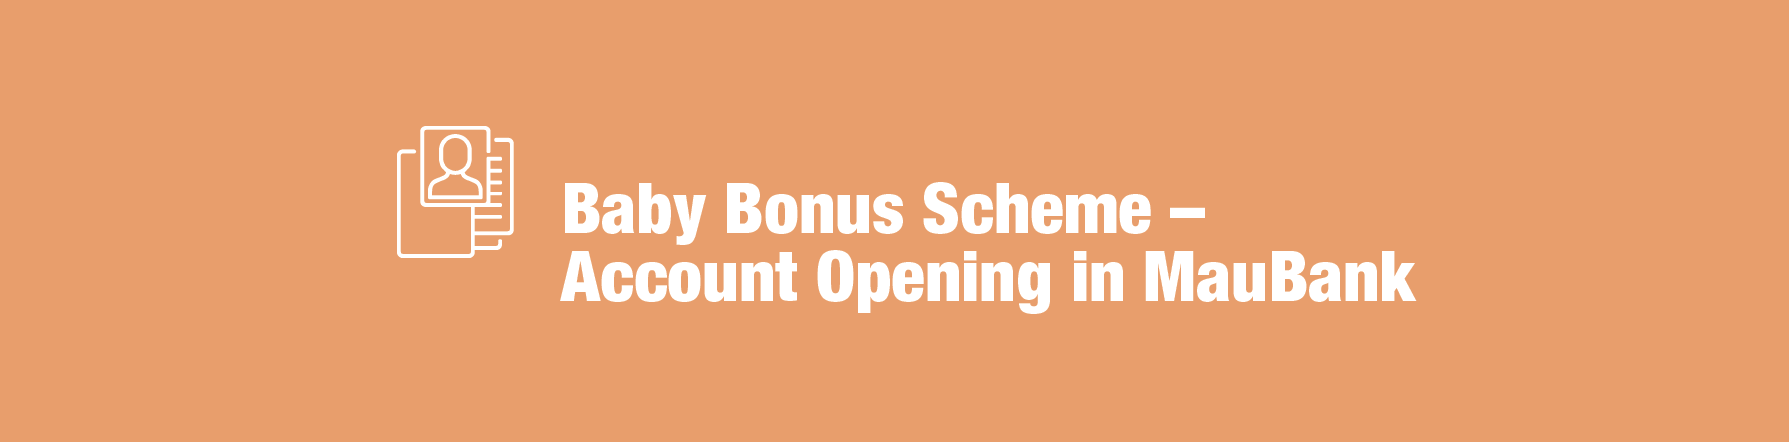 COMMUNIQUE – Baby Bonus Scheme – Account Opening in MauBank